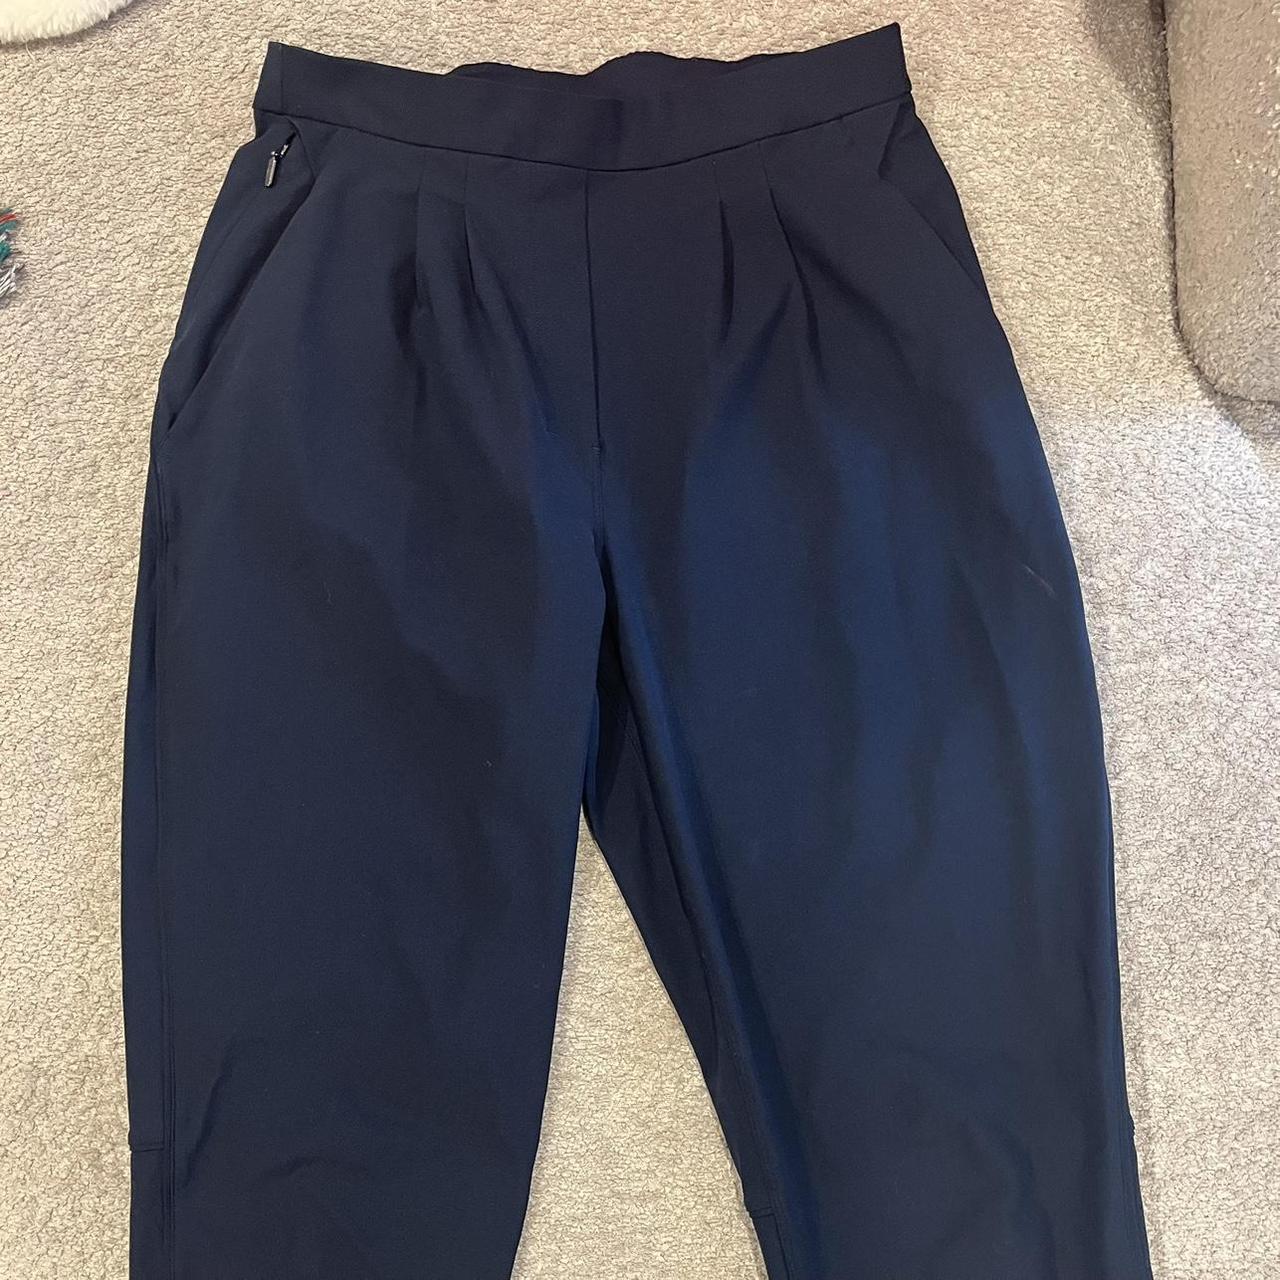 Lululemon Women’s Pants (Size 8)